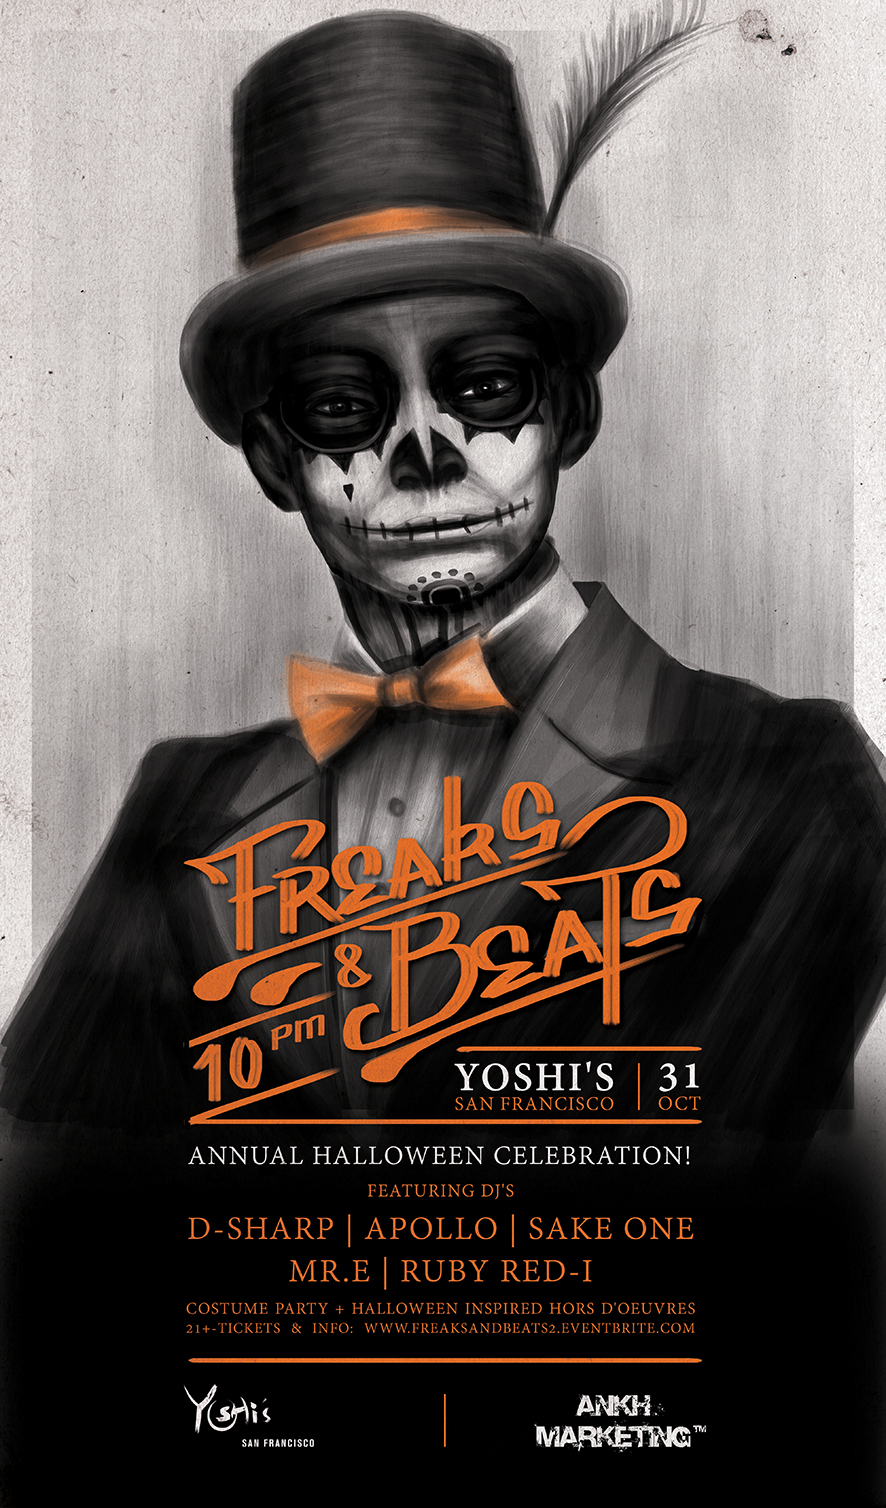 Freaks & Beats Halloween 2013